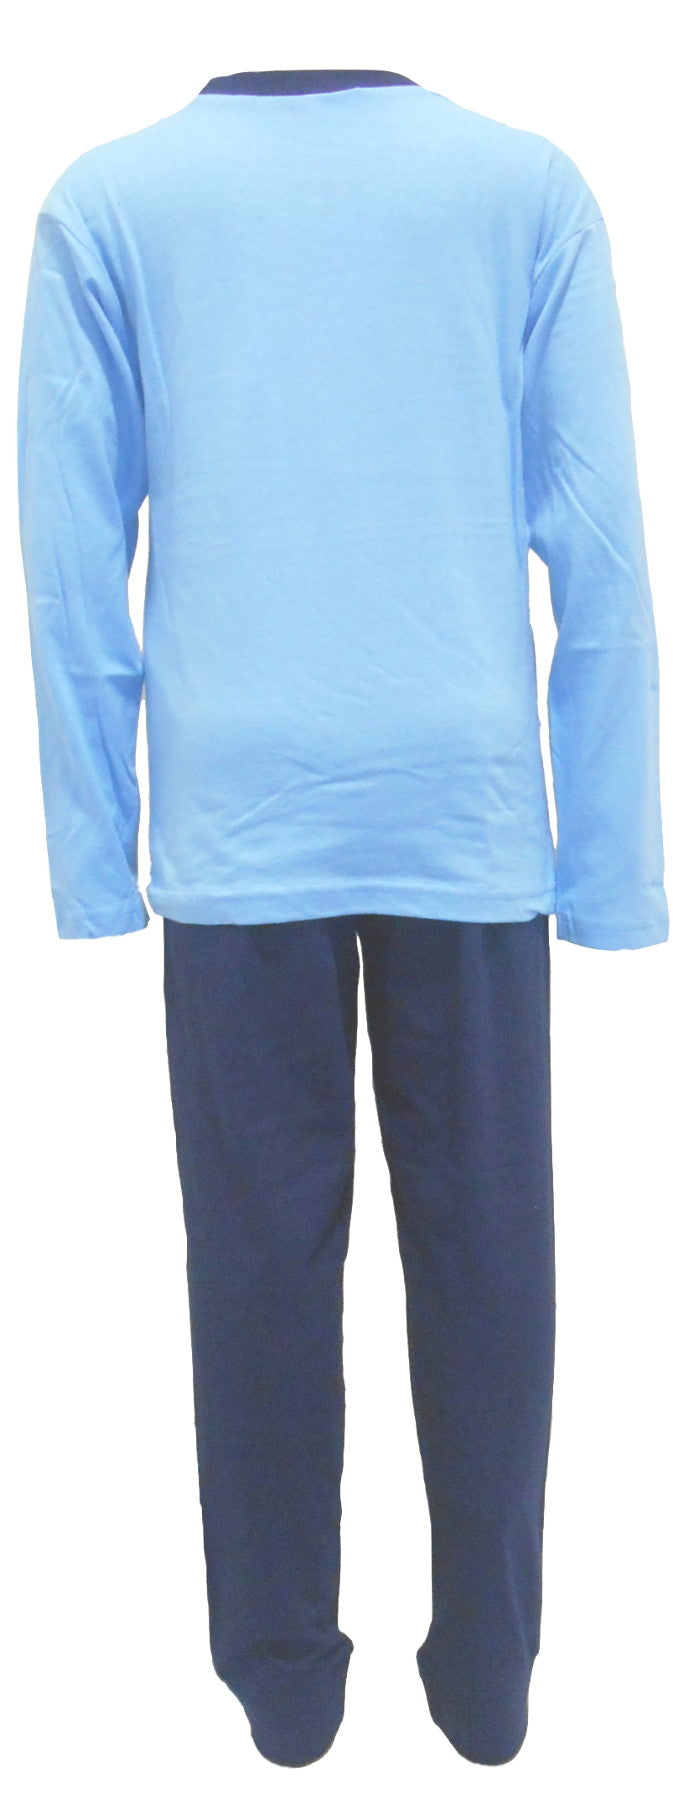 Manchester City Football Club "Crest" Boys Pyjamas 4-12 Years